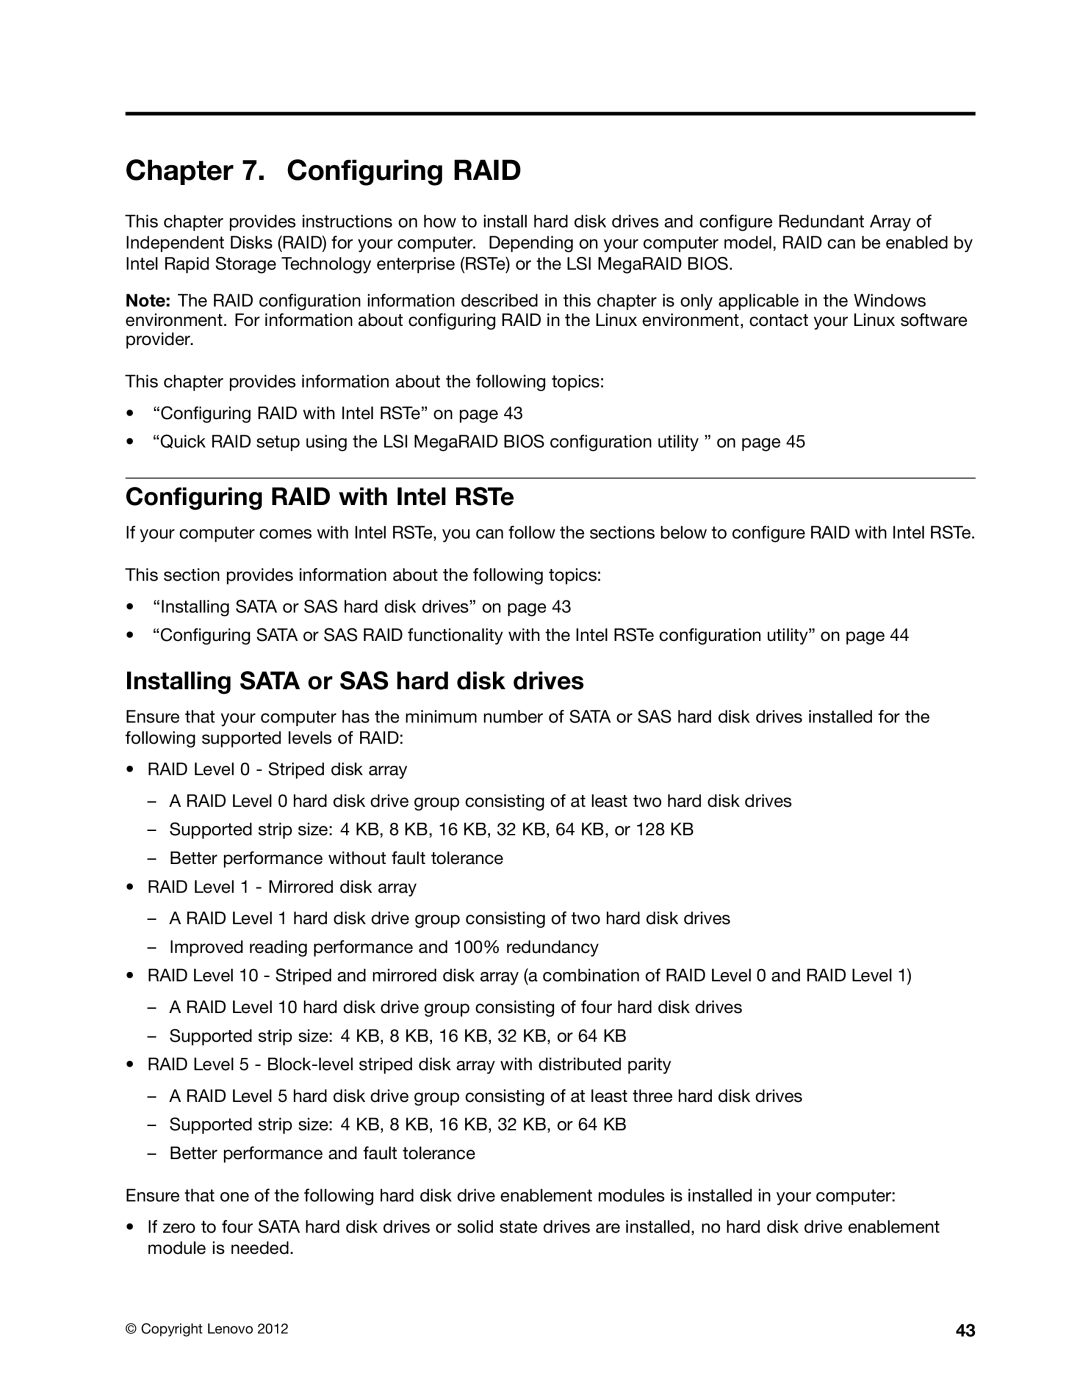 Lenovo 4228, 4223, 4229 manual Configuring RAID with Intel RSTe, Installing Sata or SAS hard disk drives 